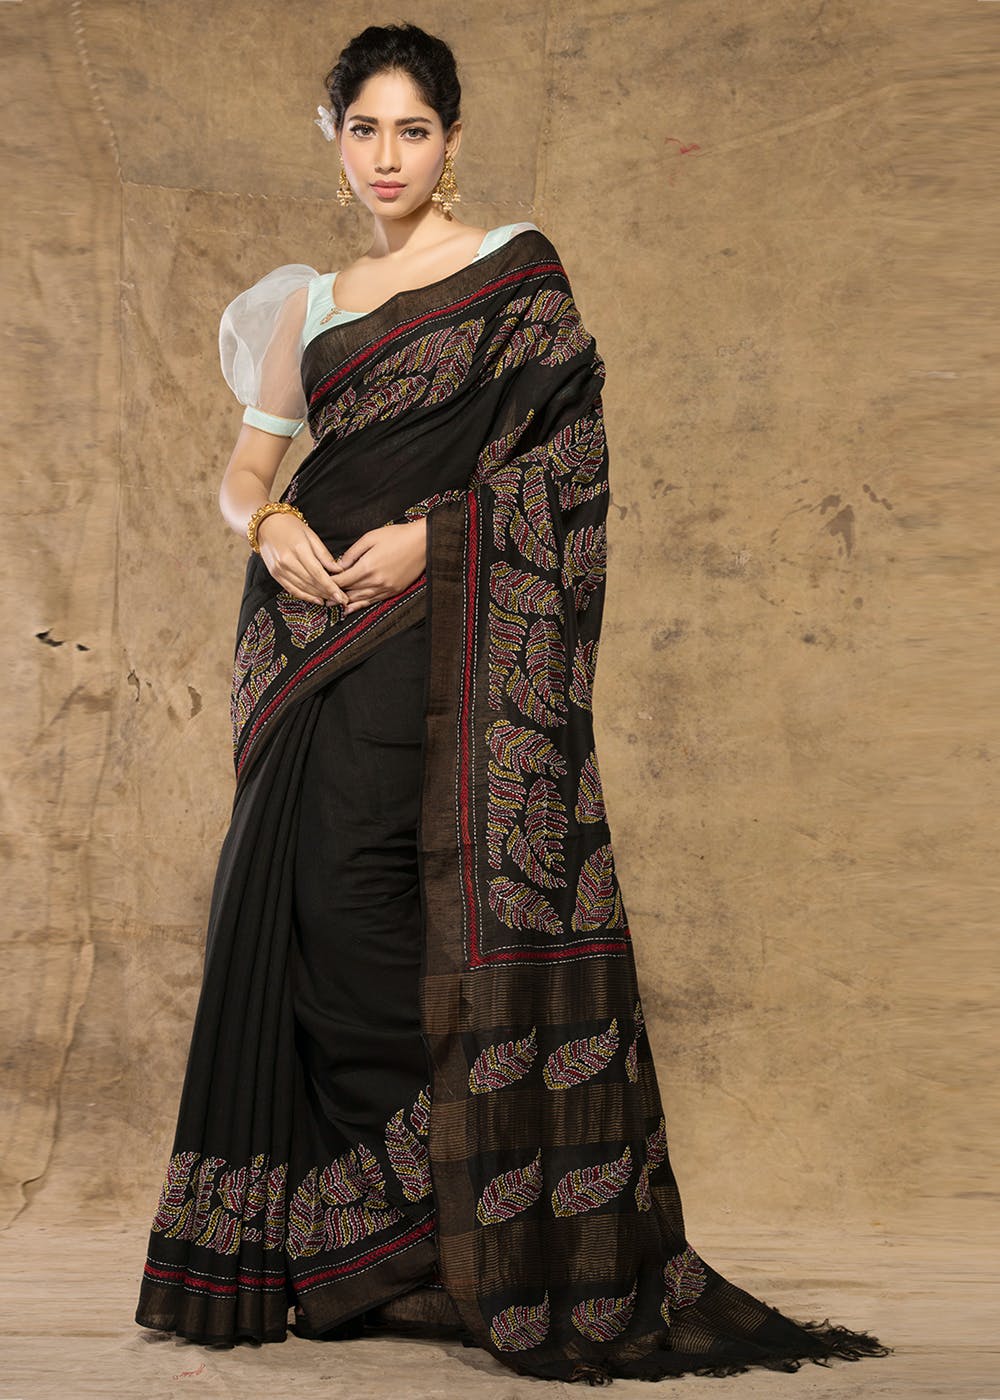 Get Tussar Bafta Silk Black Kantha Embroidered Saree at ₹ 8850 | LBB Shop